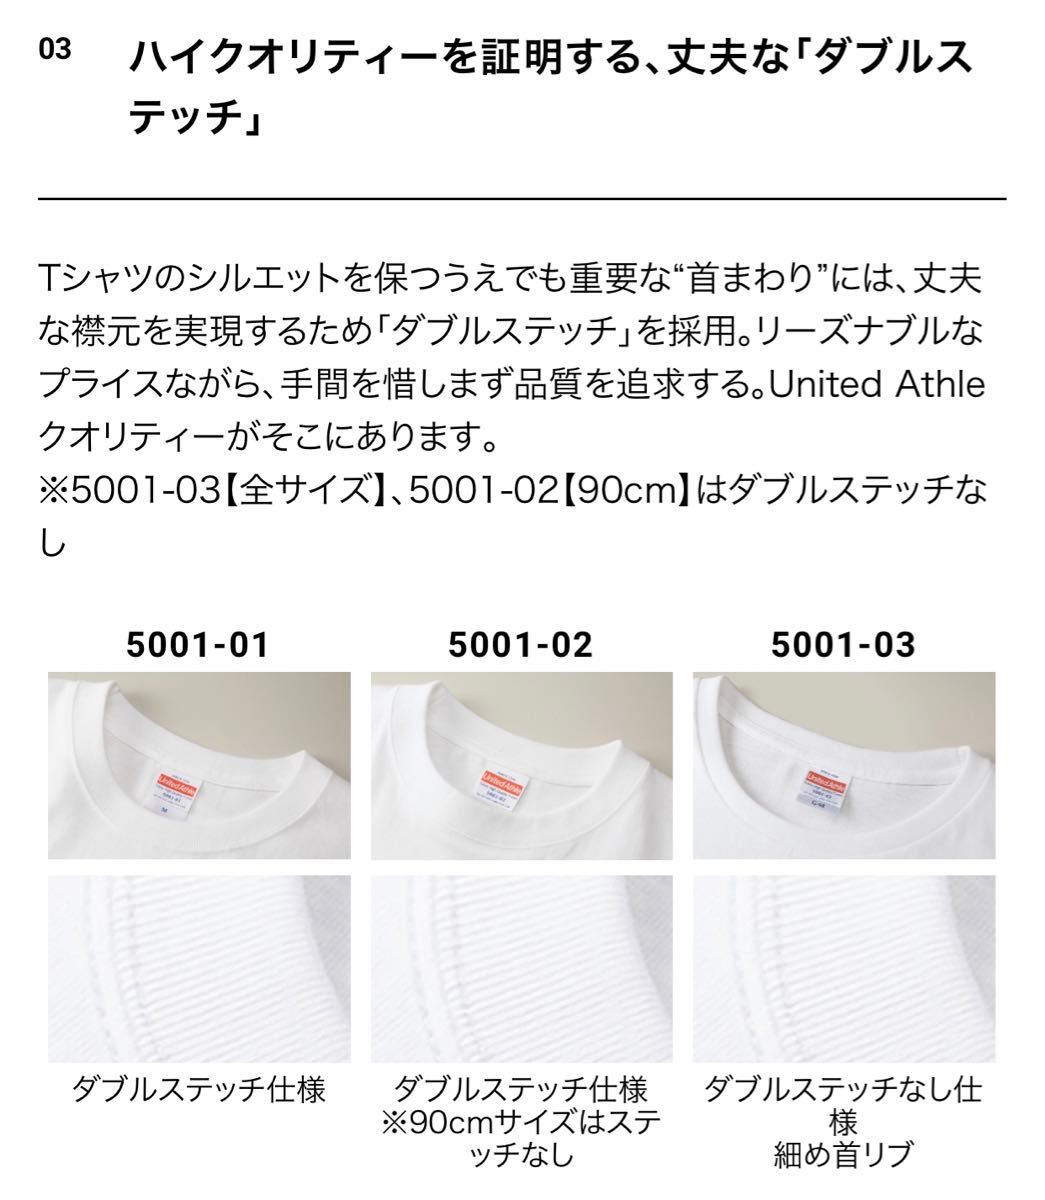 Tシャツ  半袖 5.6オンス ハイクオリティー【5001-01】M ビリヤードグリーン 2枚セット 圧縮発送